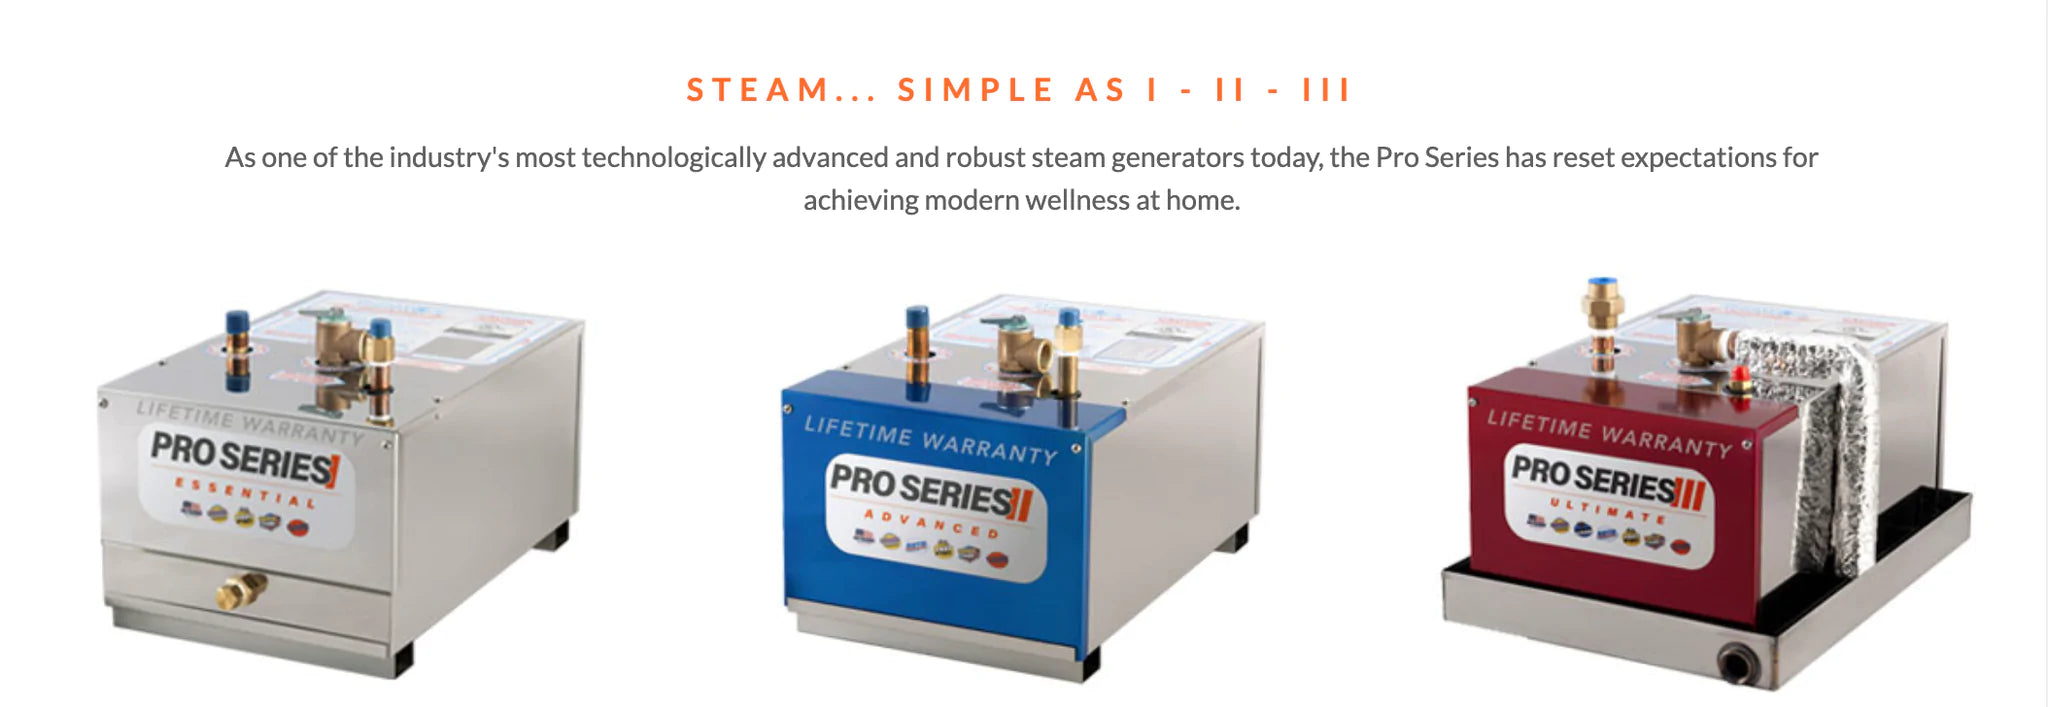 ThermaSol Pro Series 3 "Ultimate" Steam Generator - PROIII